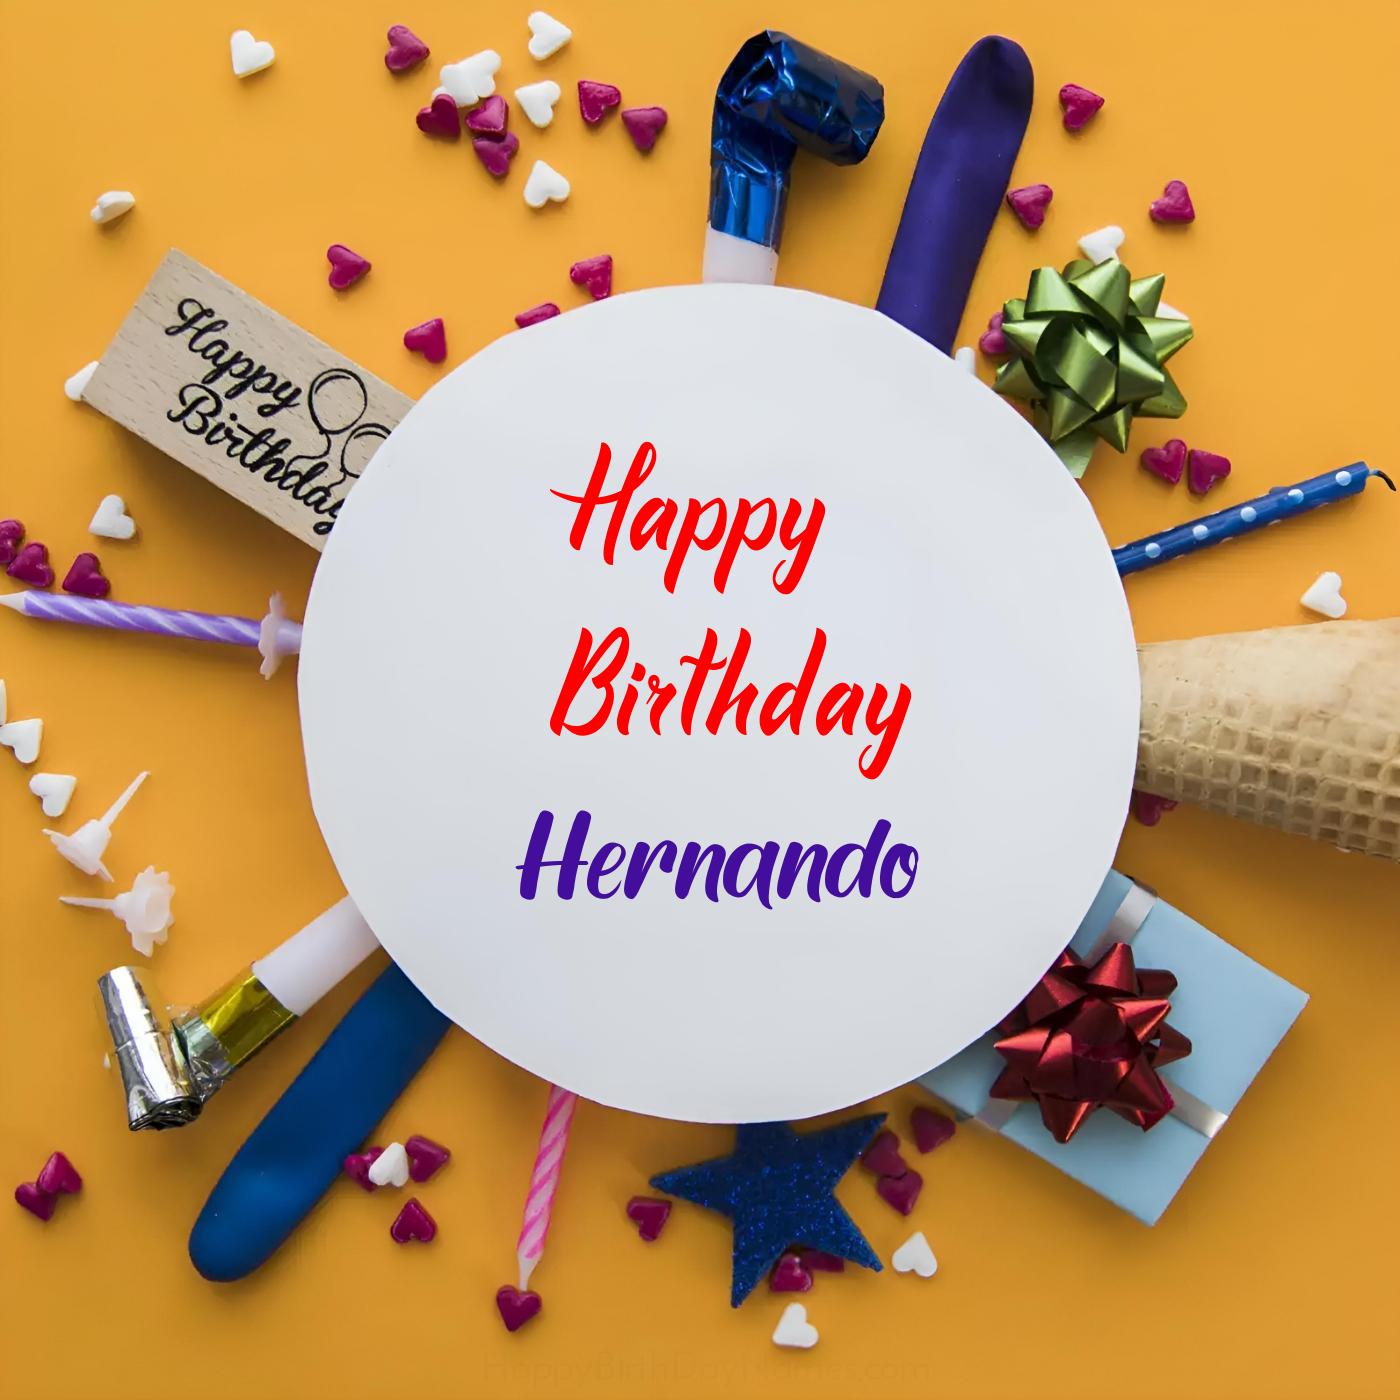 Happy Birthday Hernando Round Frame Card